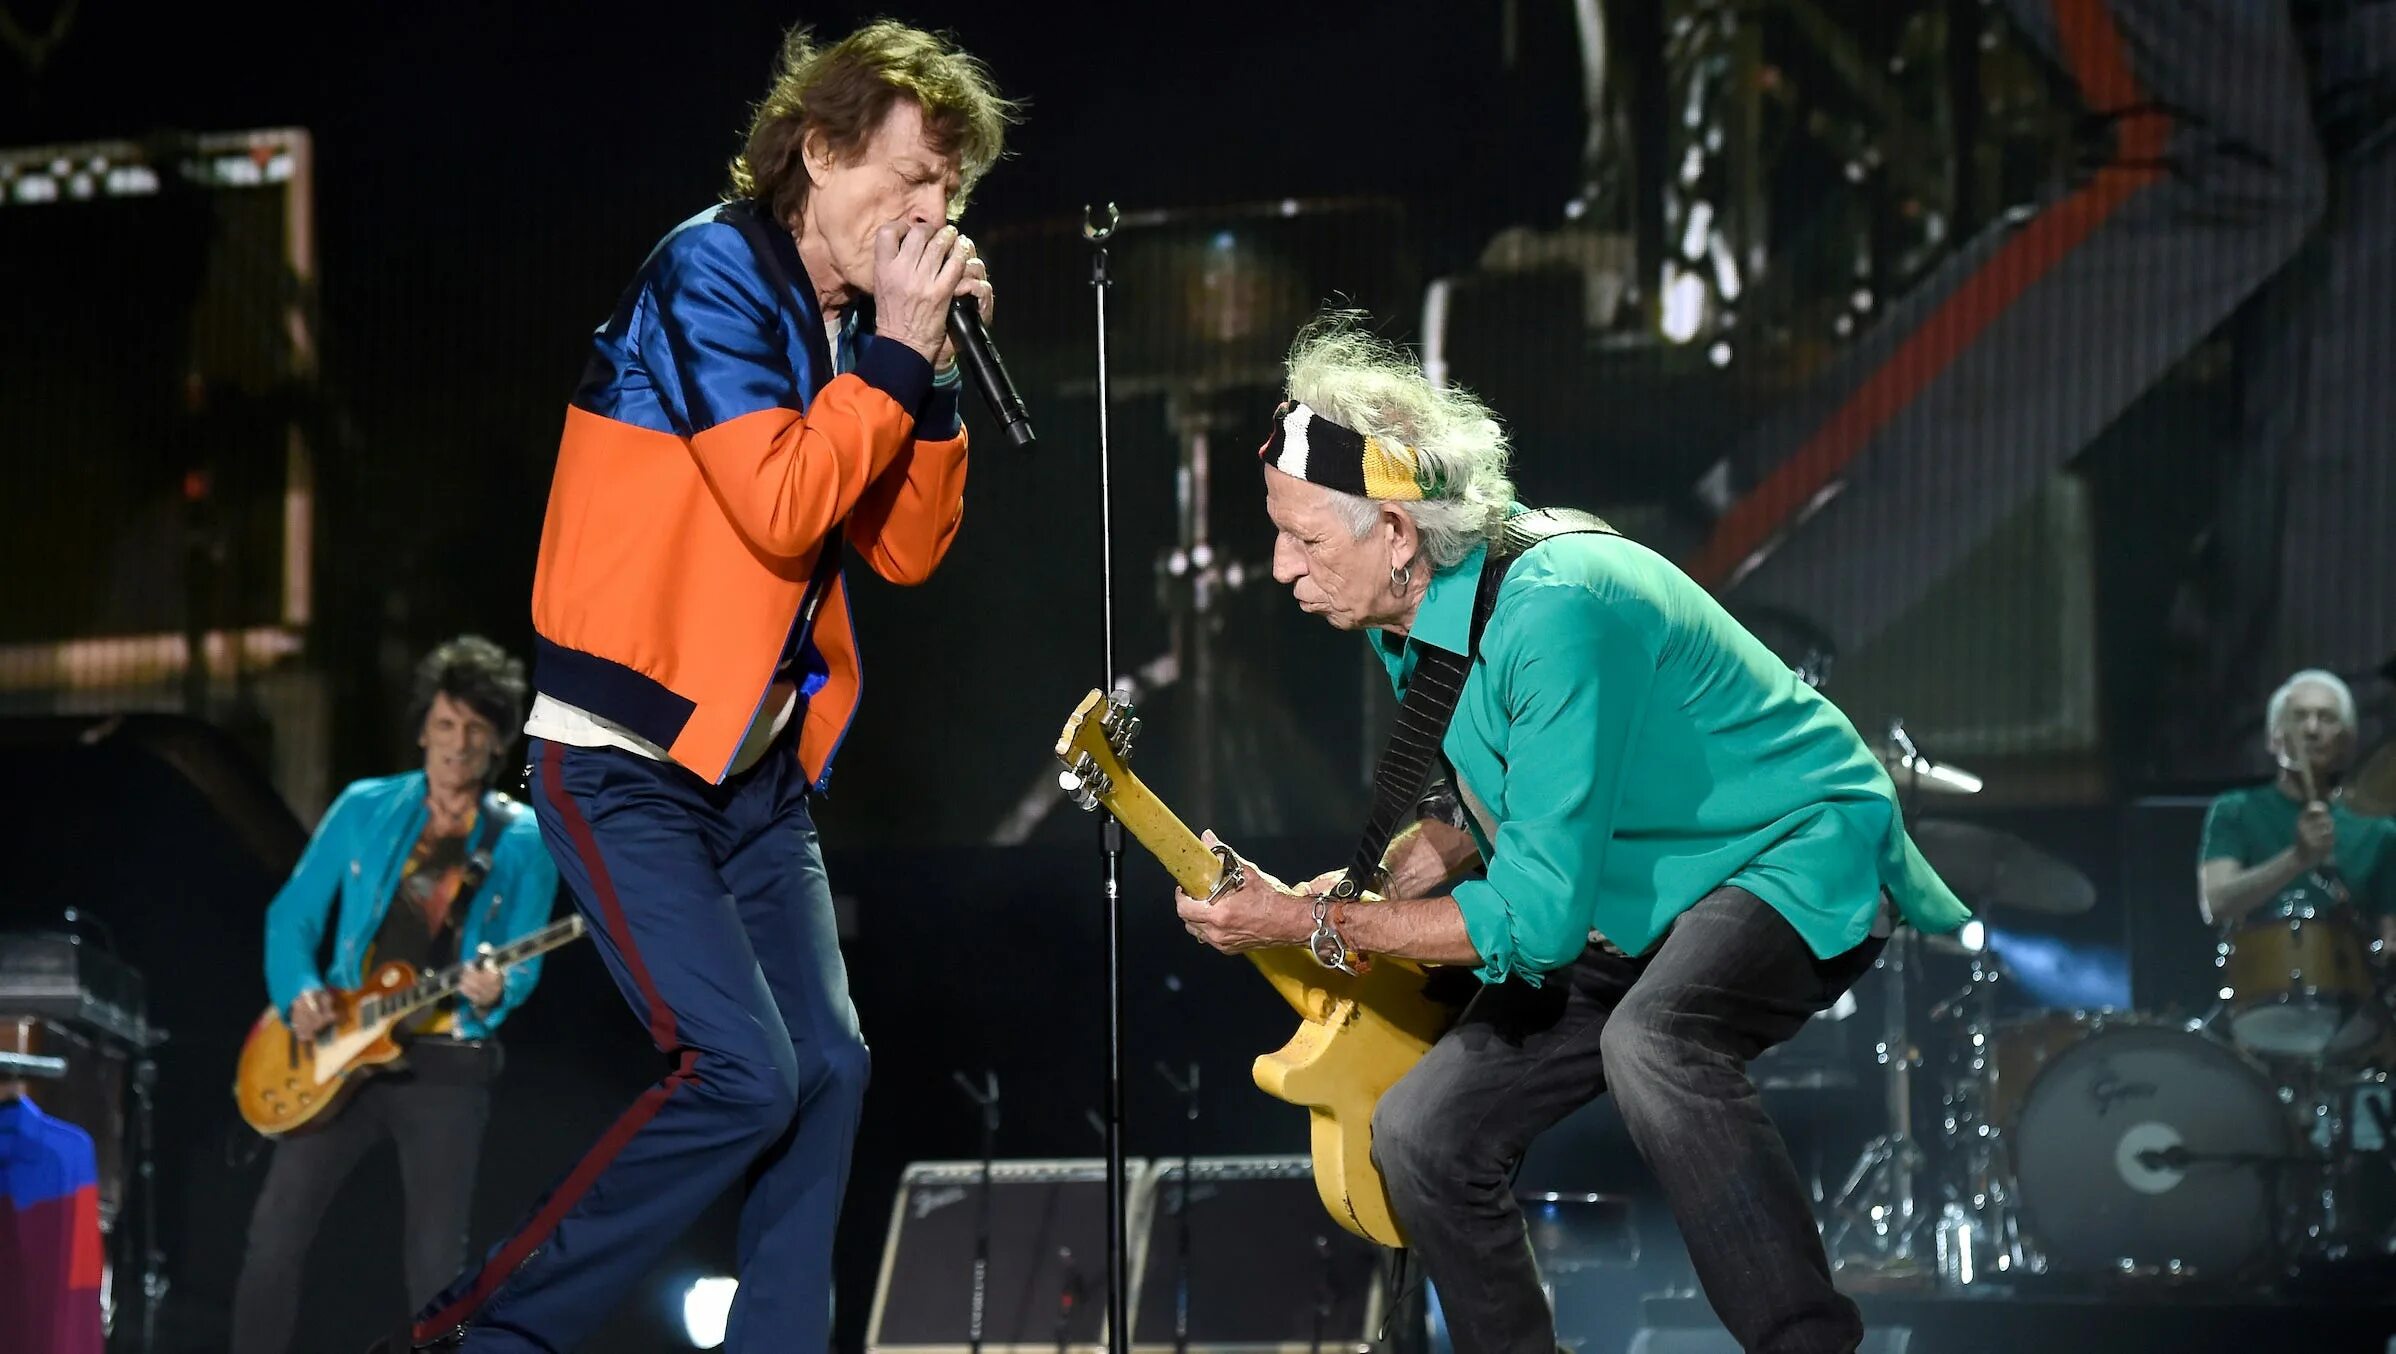 Rolling Stones 2022. Концерт Rolling Stones 2022. Rolling Stones on Stage 60. Боб Дилан и группа Роллинг стоунз.